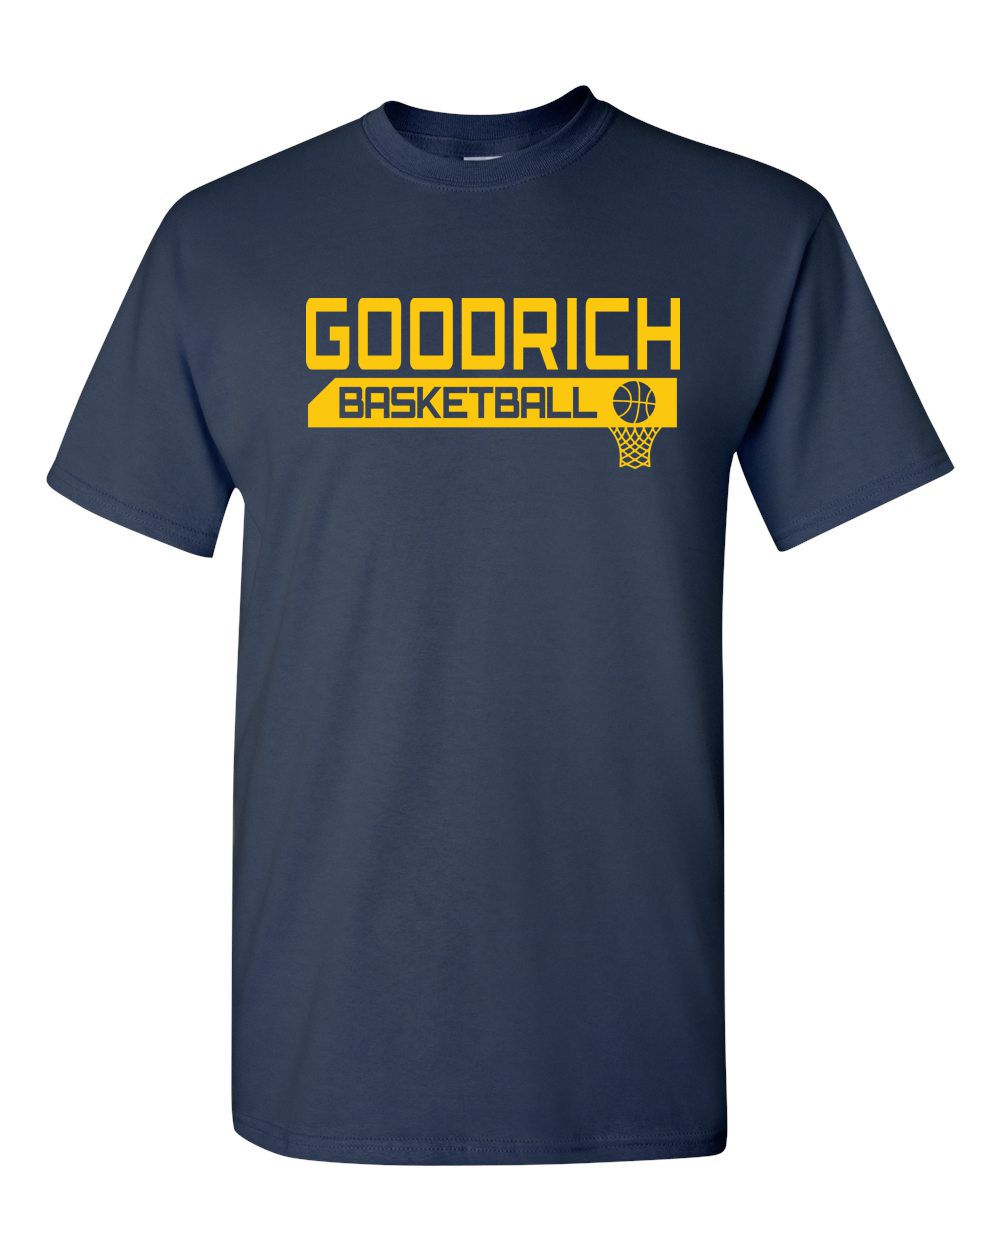 Goodrich Basketball